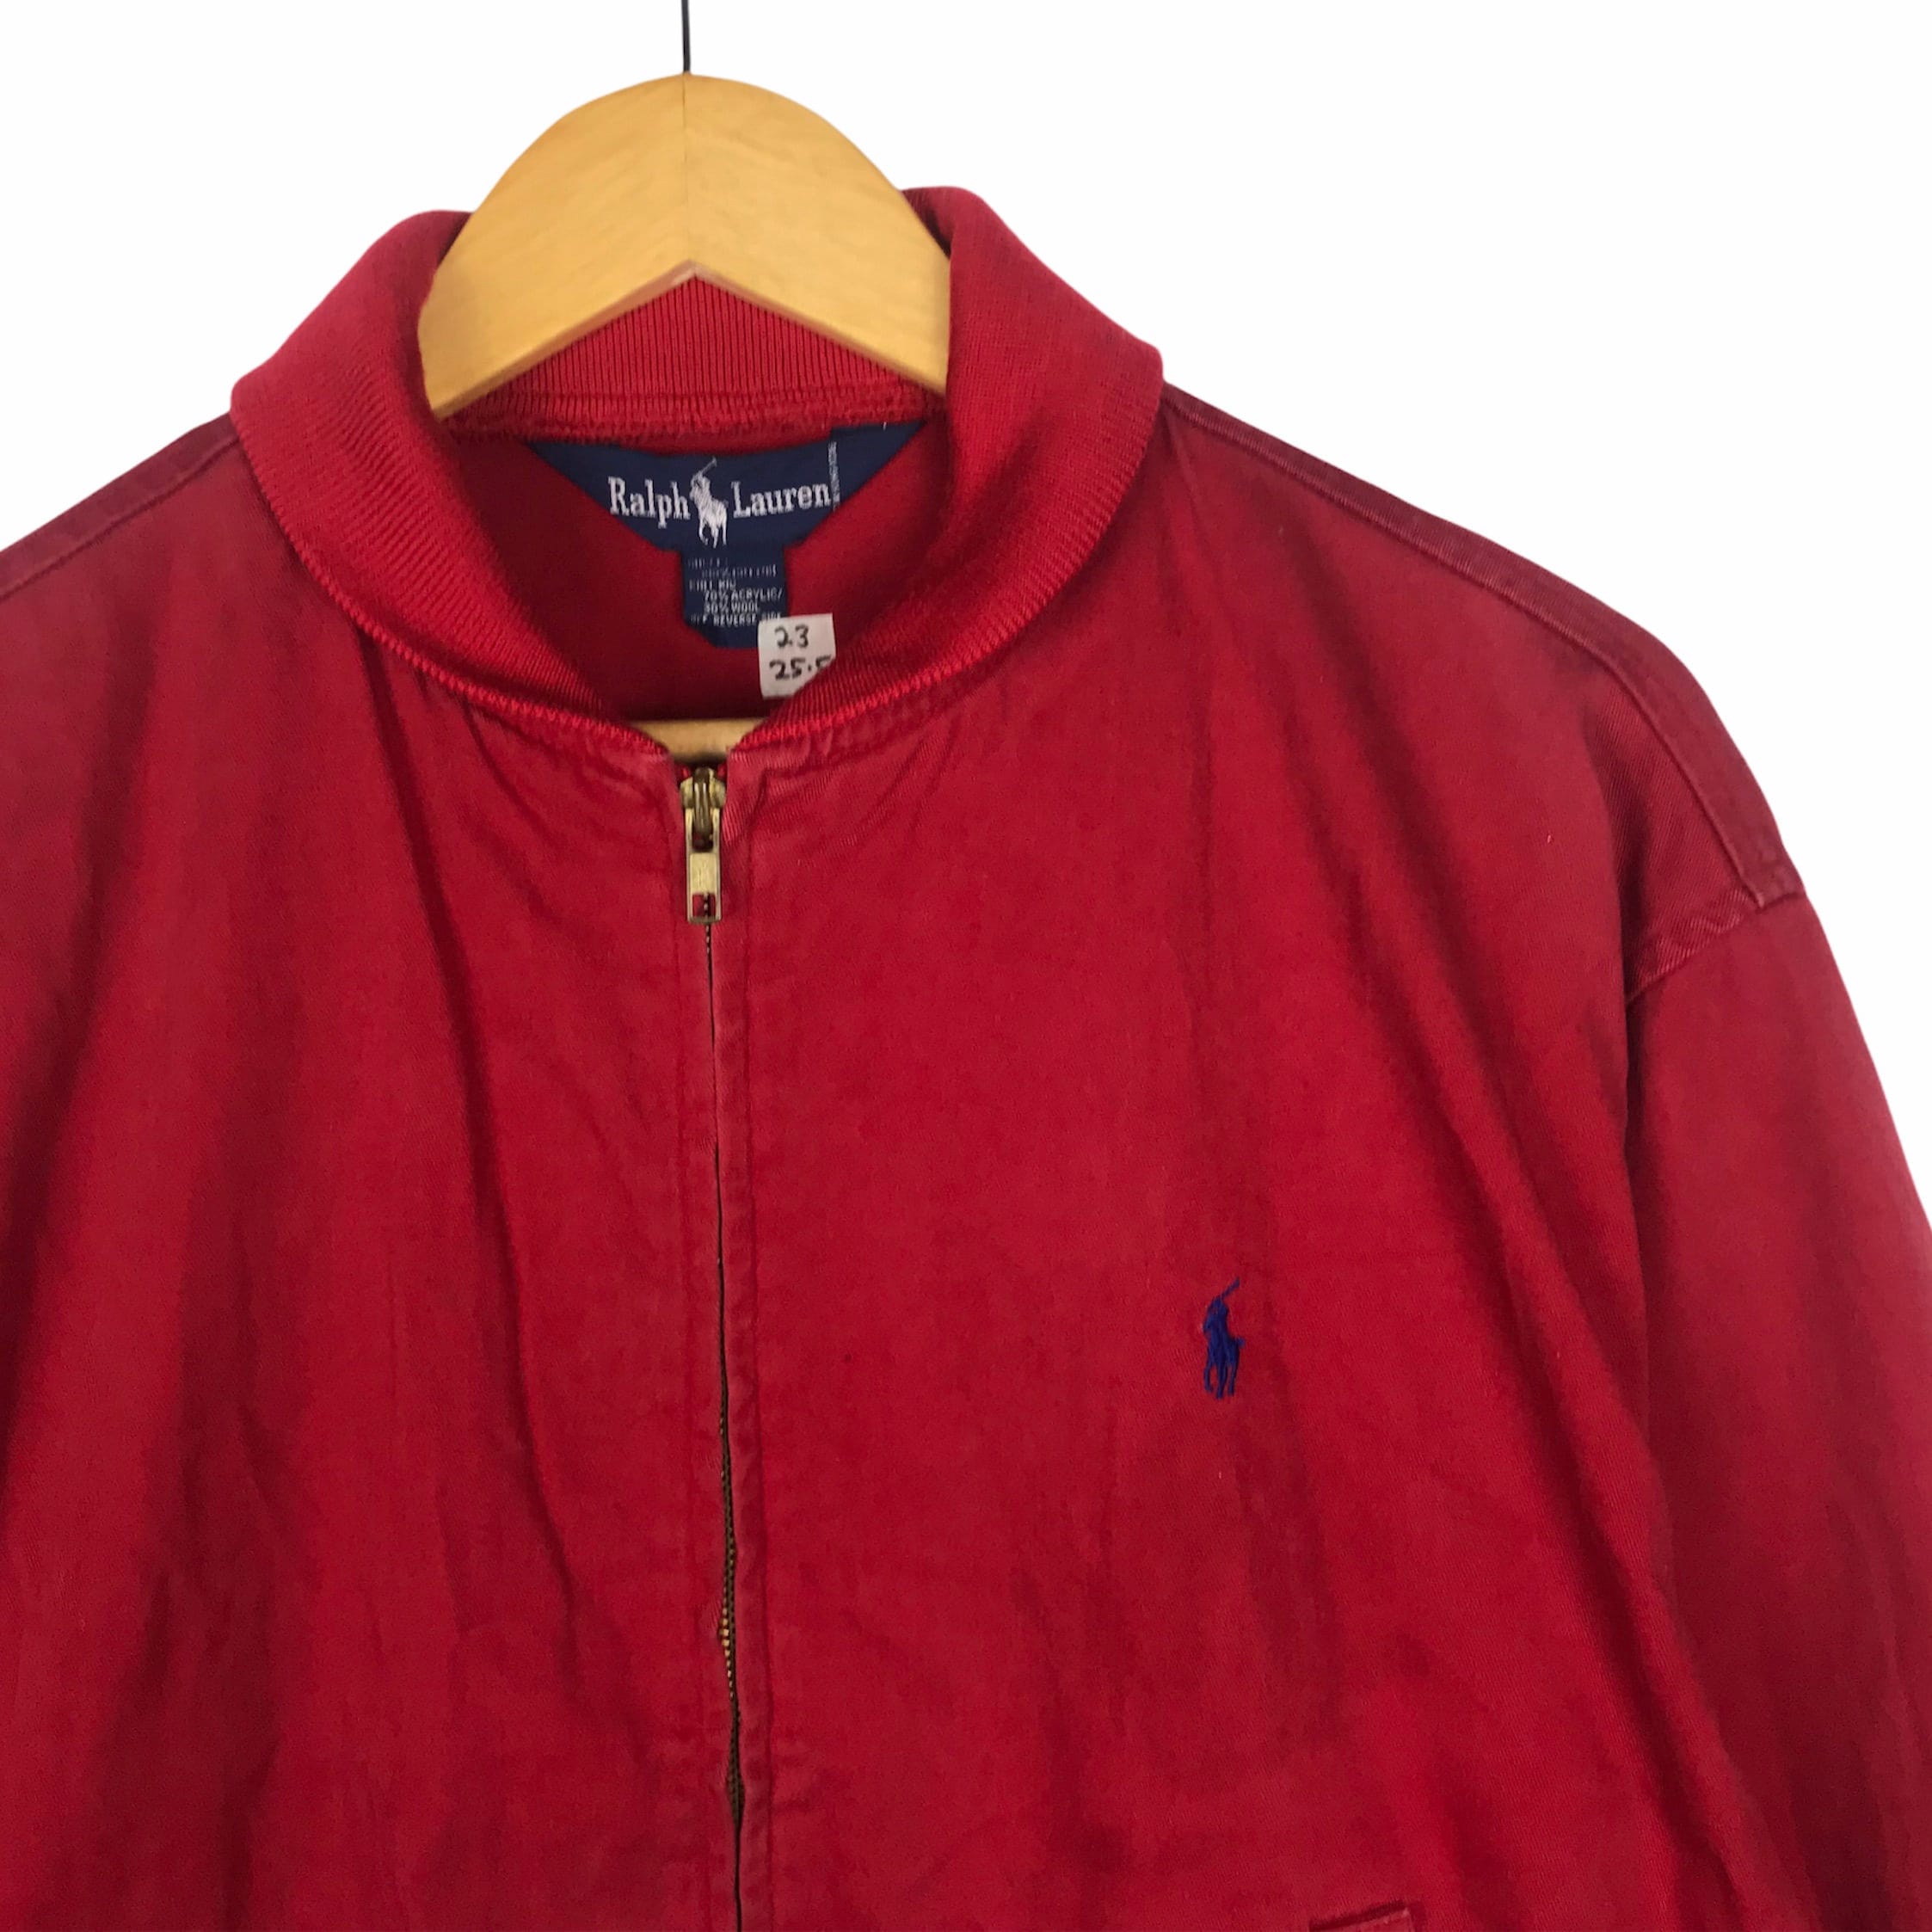 Rare!! Vintage 90s Polo Ralph Lauren Harrington Jacket / Red / large / Avs4